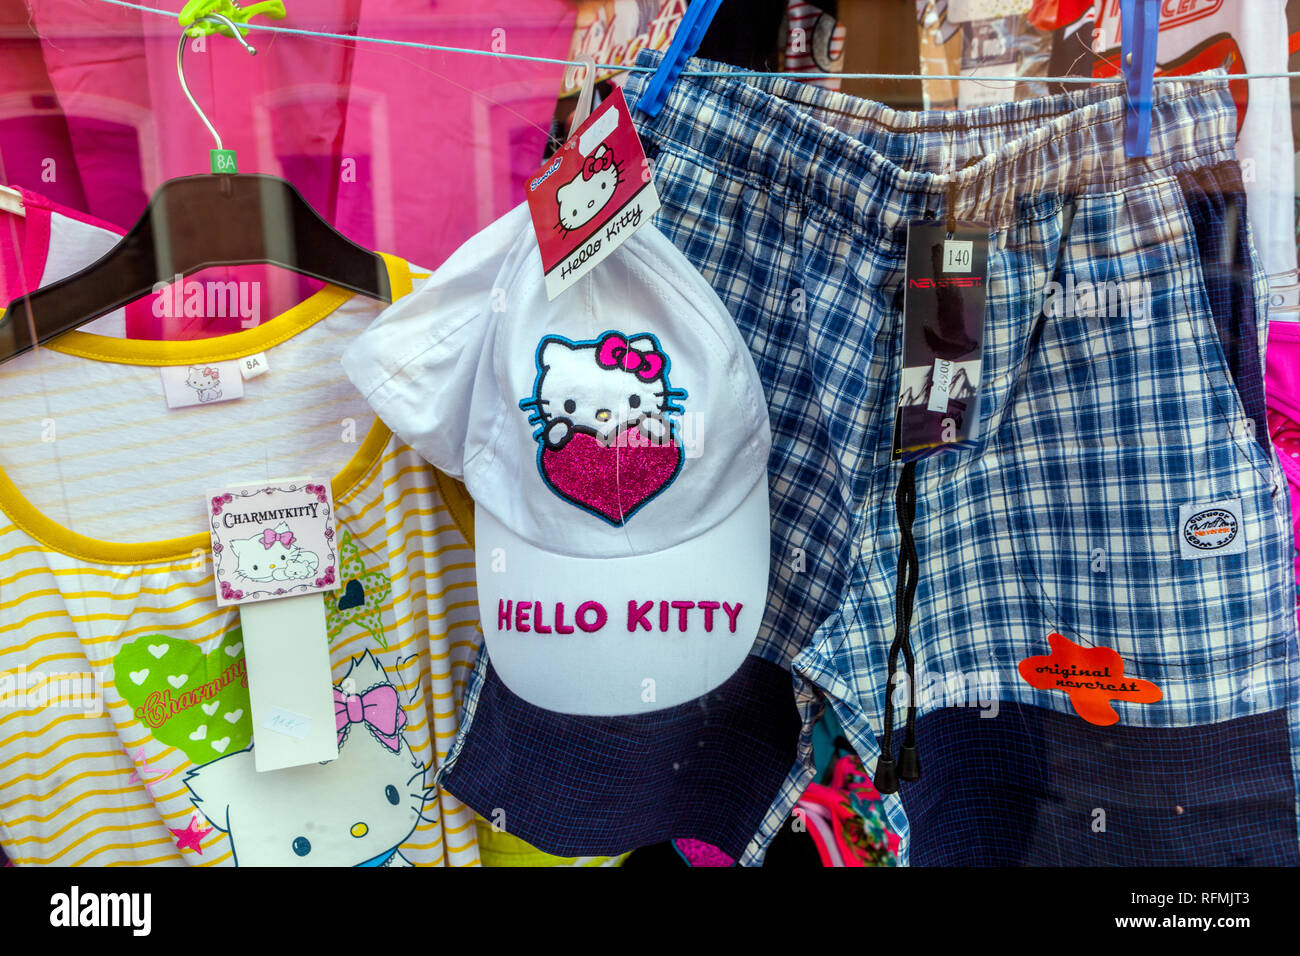 Hello Kitty cap in shop window display Stock Photo